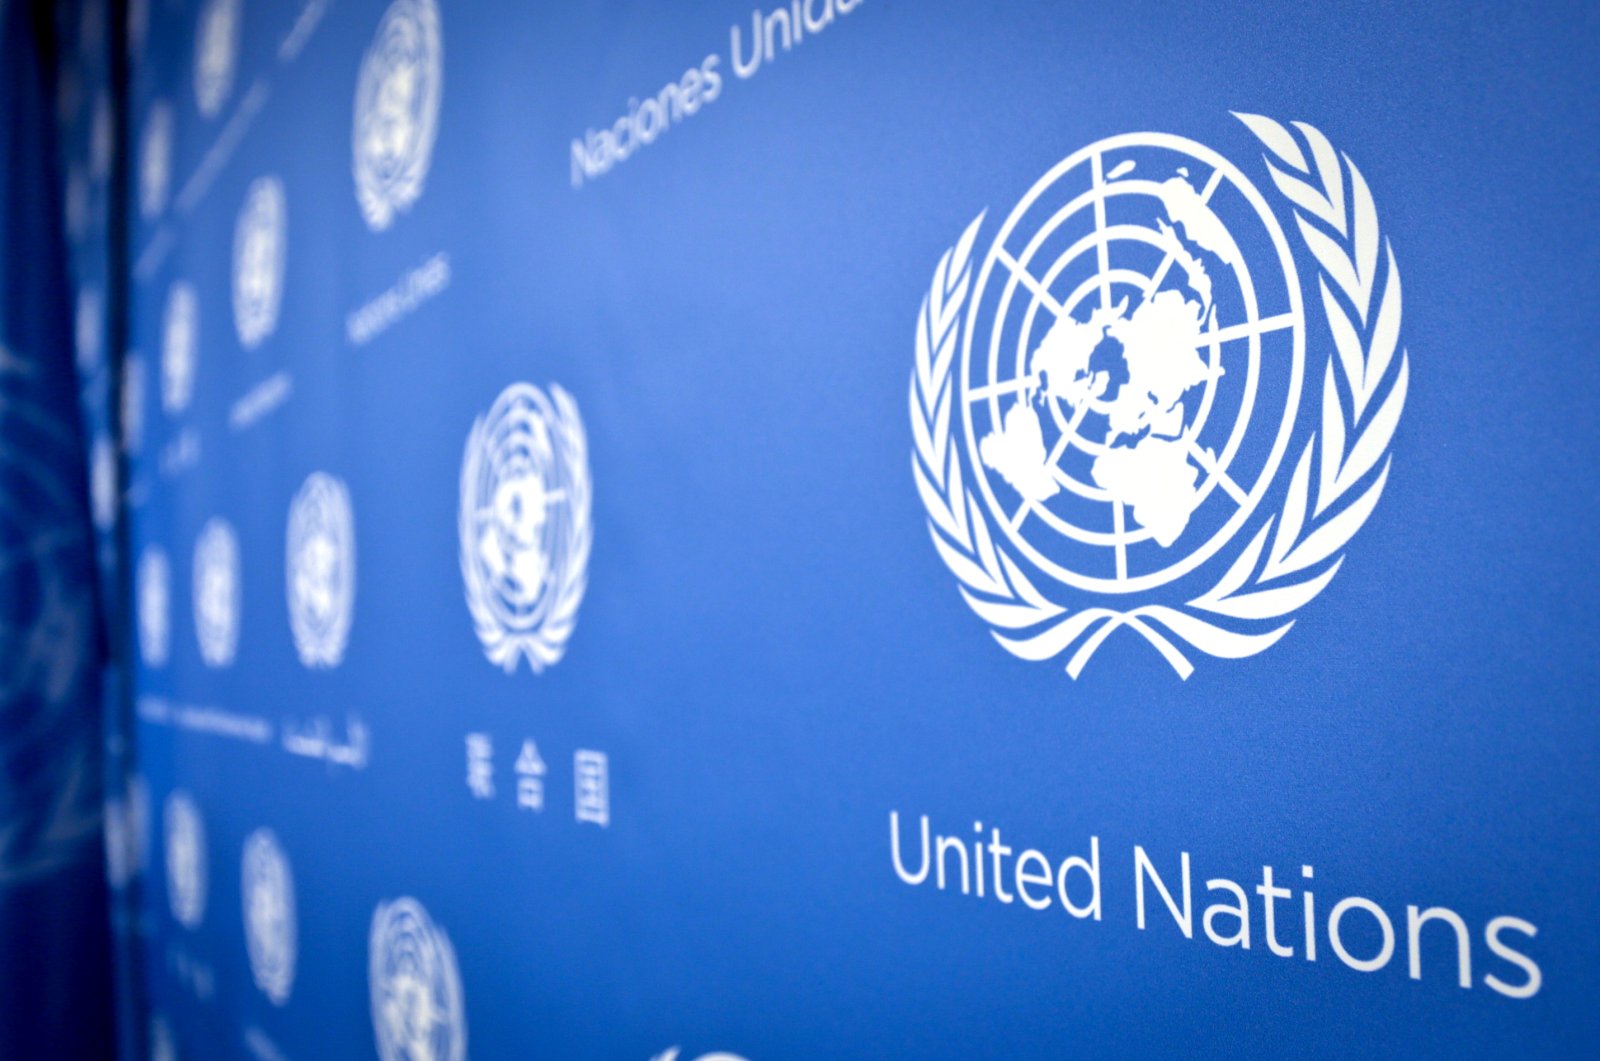 The U.N. logo is seen at the United Nations headquarters, New York, U.S., Sept. 3, 2013. (AP Photo)